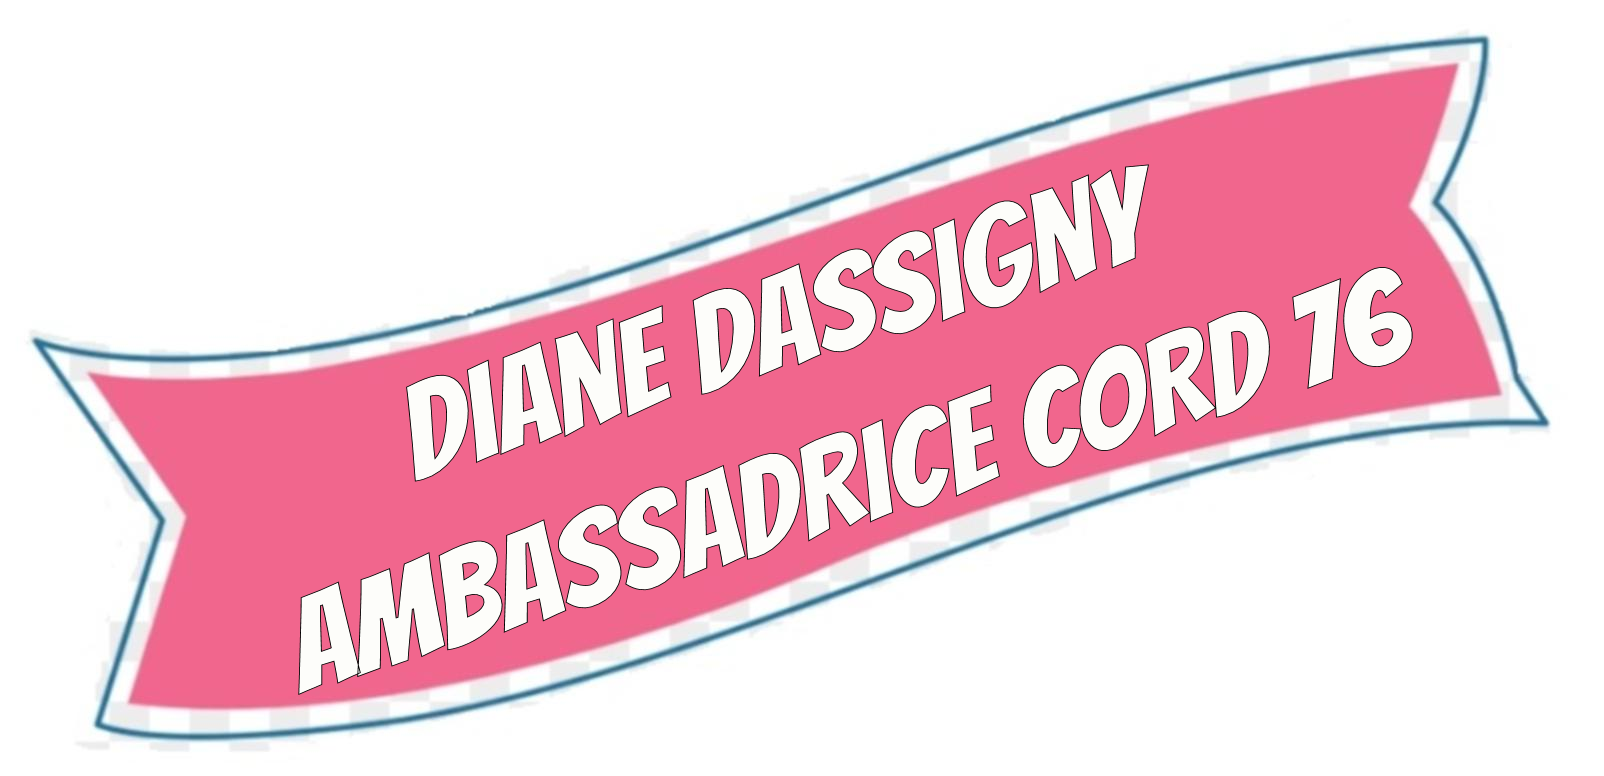 Diane dassigny logo ambassadrice grand logo rose